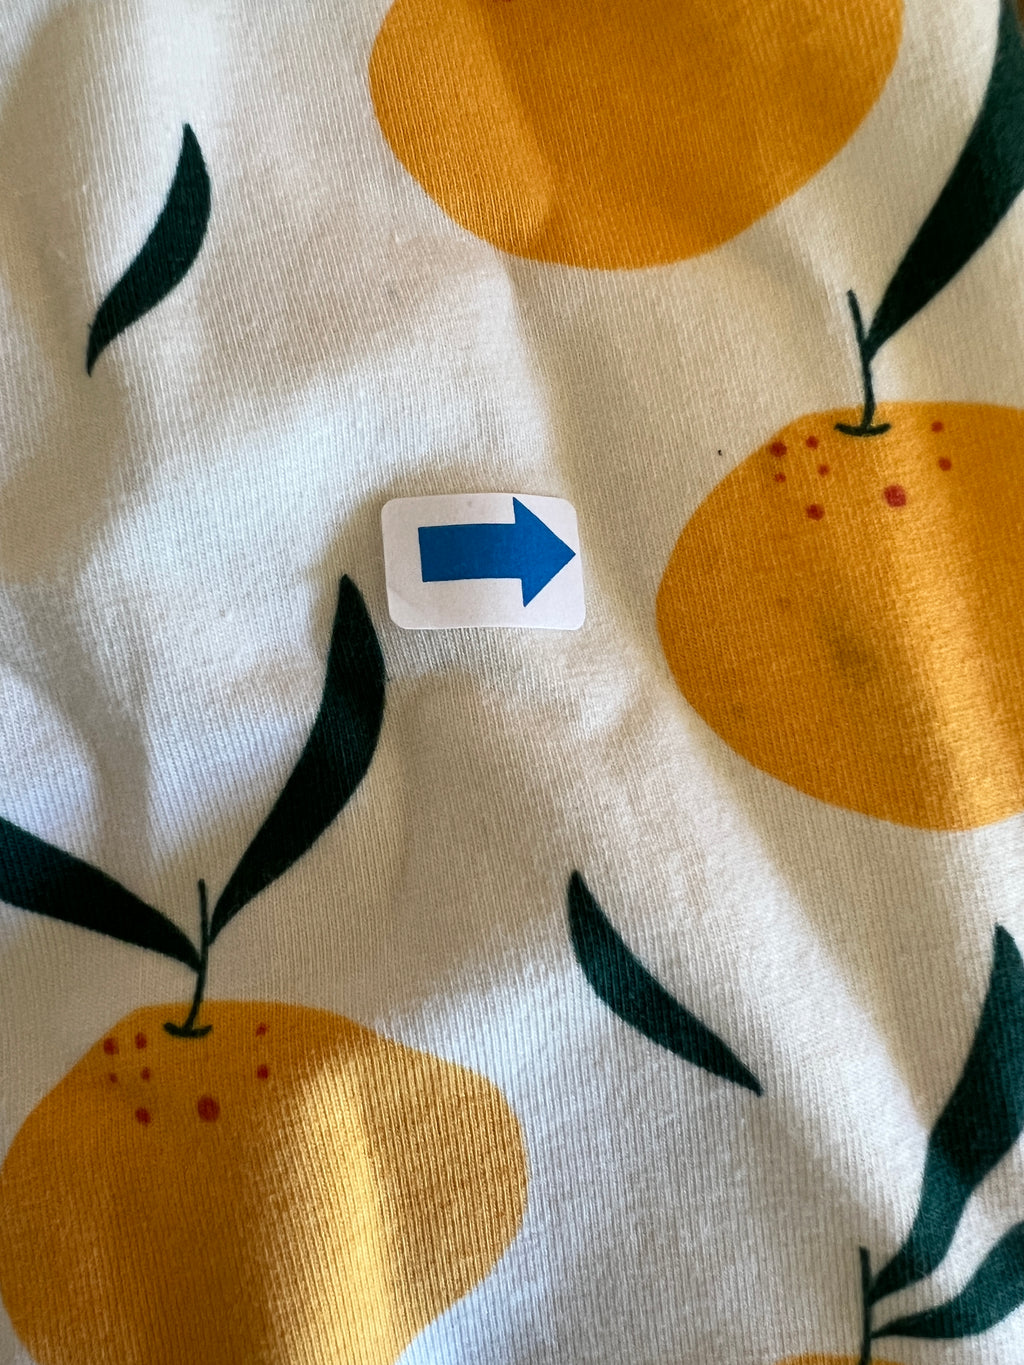 Seconds of Eddie & Bee organic cotton Baby sleepsuit  in Cream " Clementine grove " print.